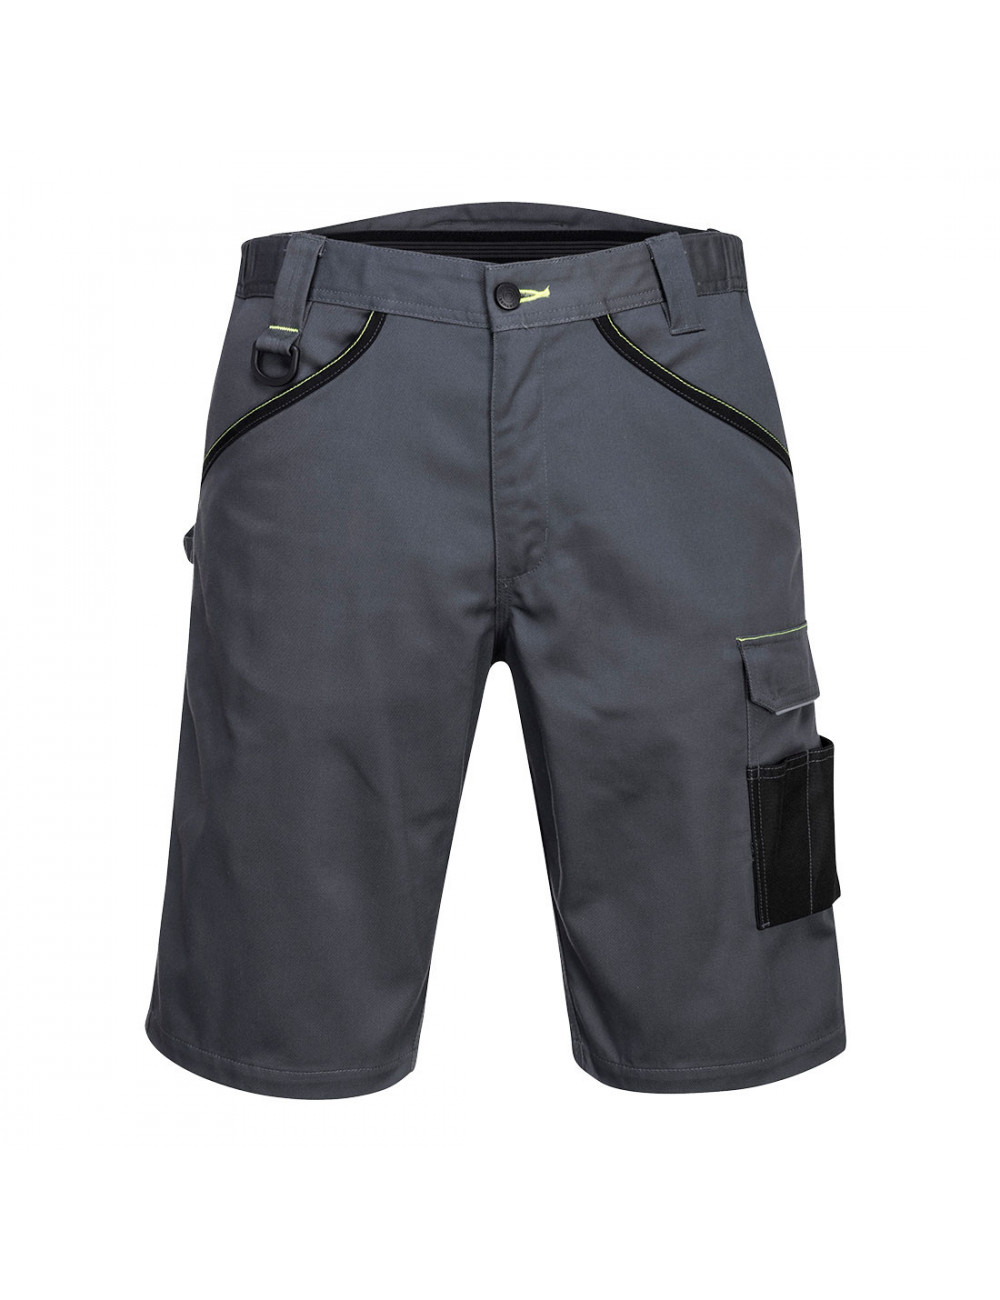 Pw3 work shorts grey/black Portwest